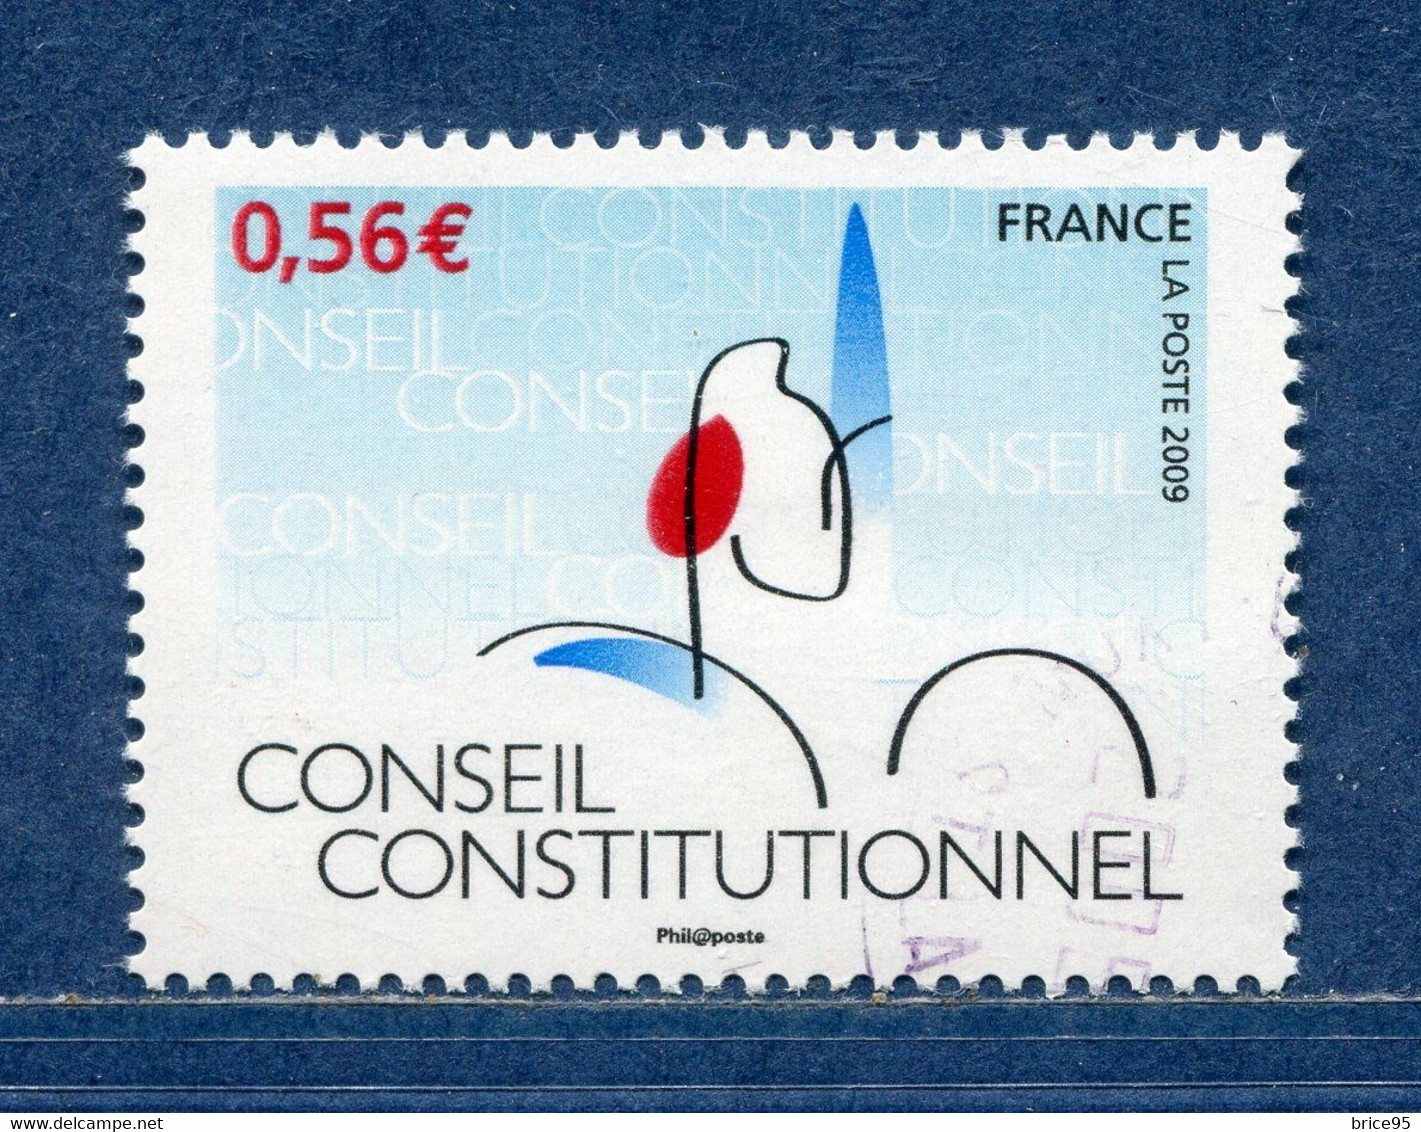 ⭐ France - YT Nº 4347 - Oblitéré Dos Neuf Sans Charnière - 2009 ⭐ - Usados